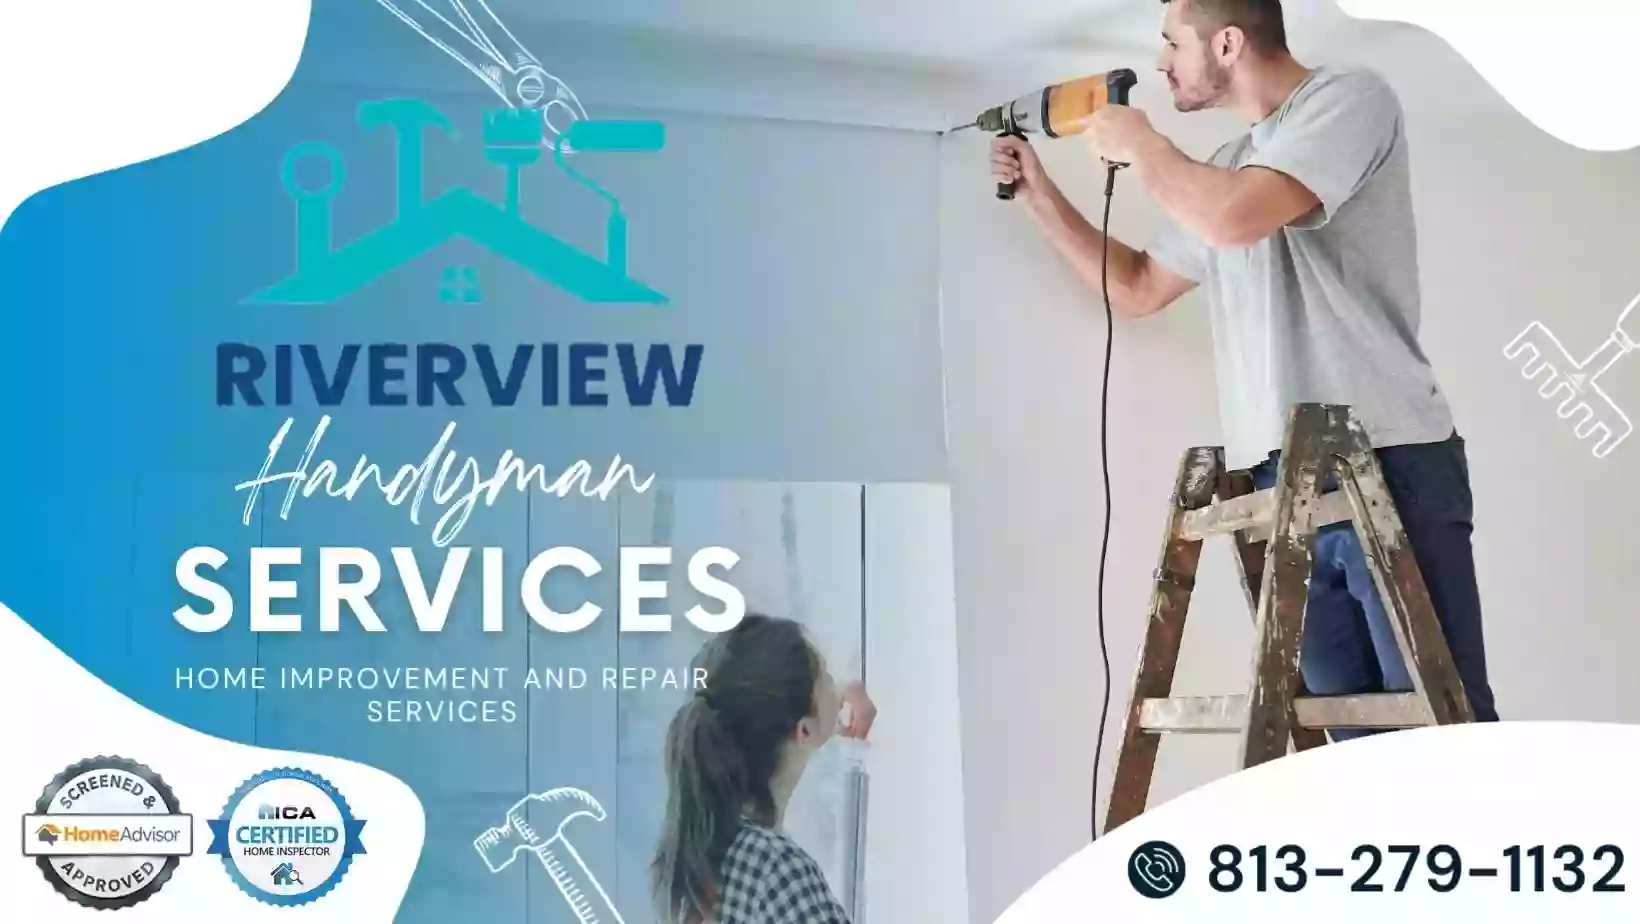 Riverview Handyman Services